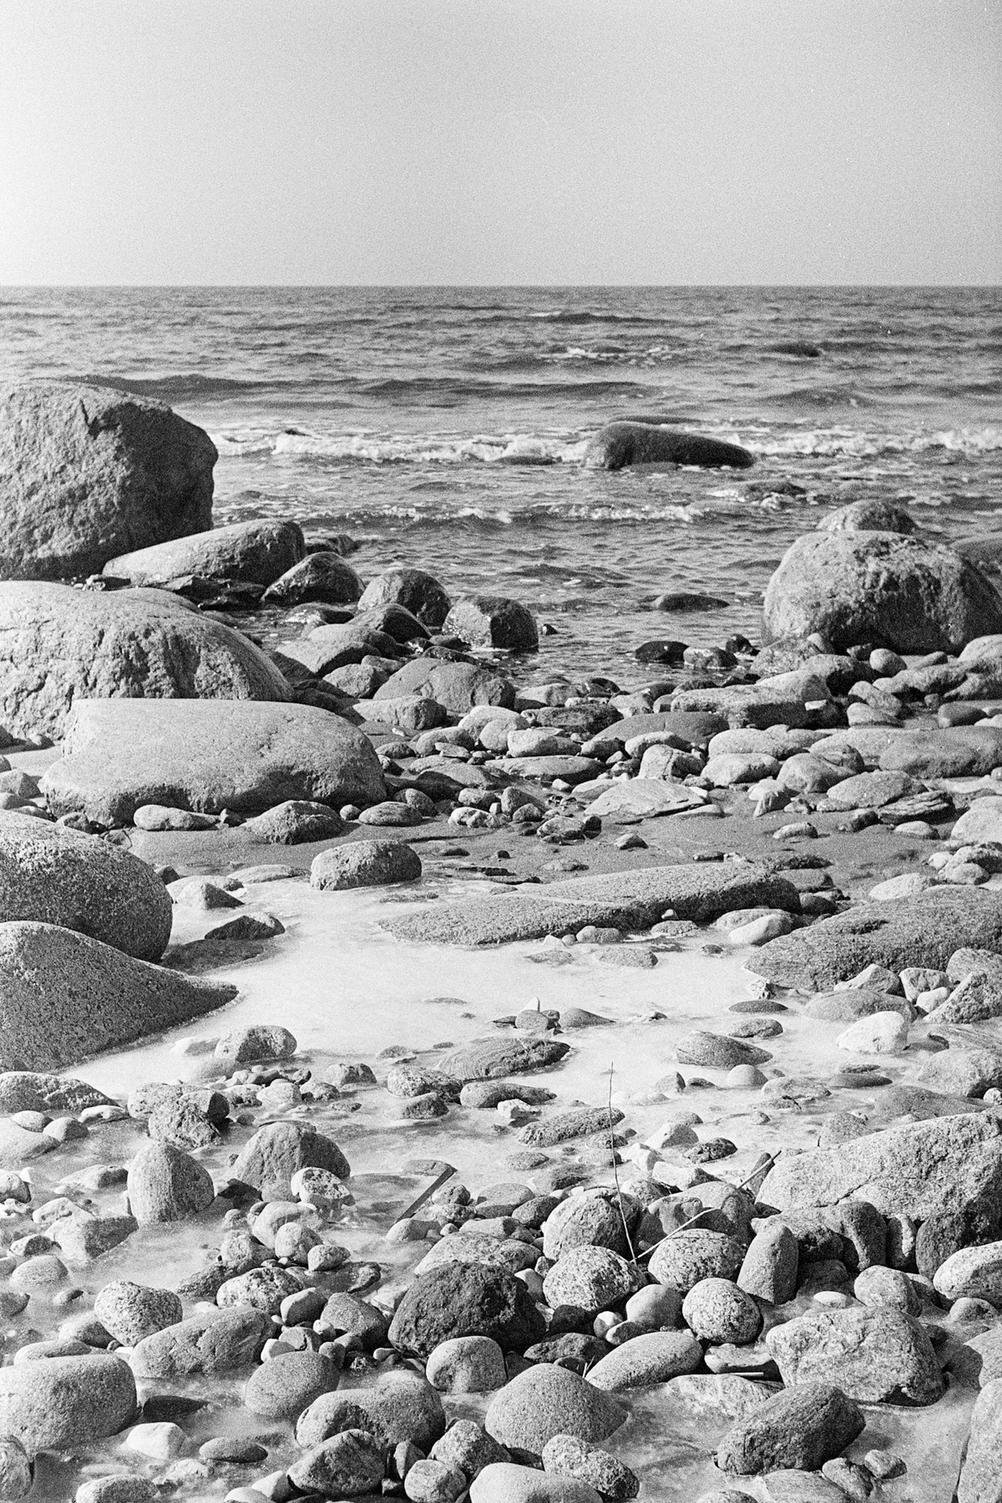 Photo of rocks on the beach.